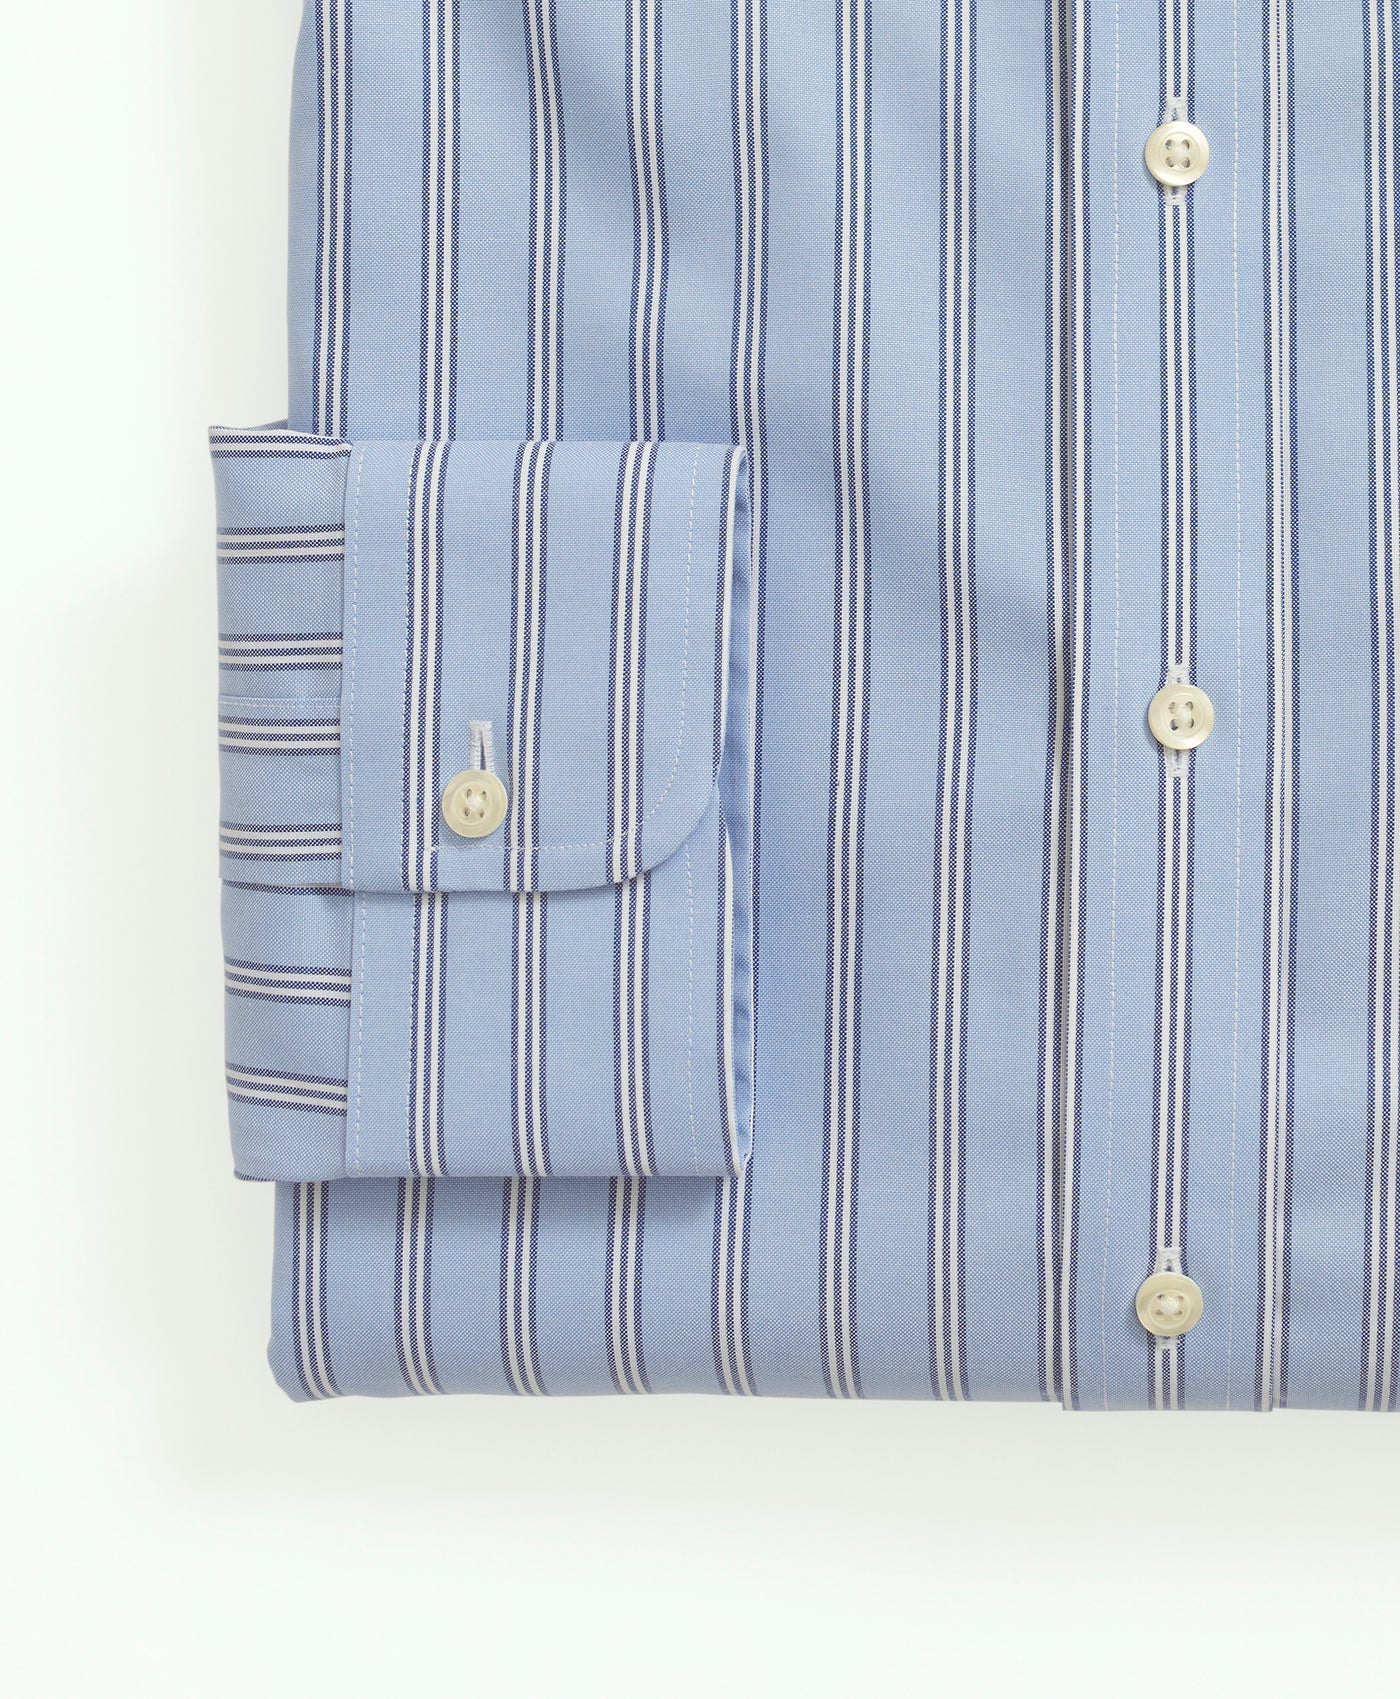 Slim-Fit Stretch Supima Cotton Non-Iron Pinpoint Oxford Button-Down Collar, BB#1 Rep Stripe Dress Shirt